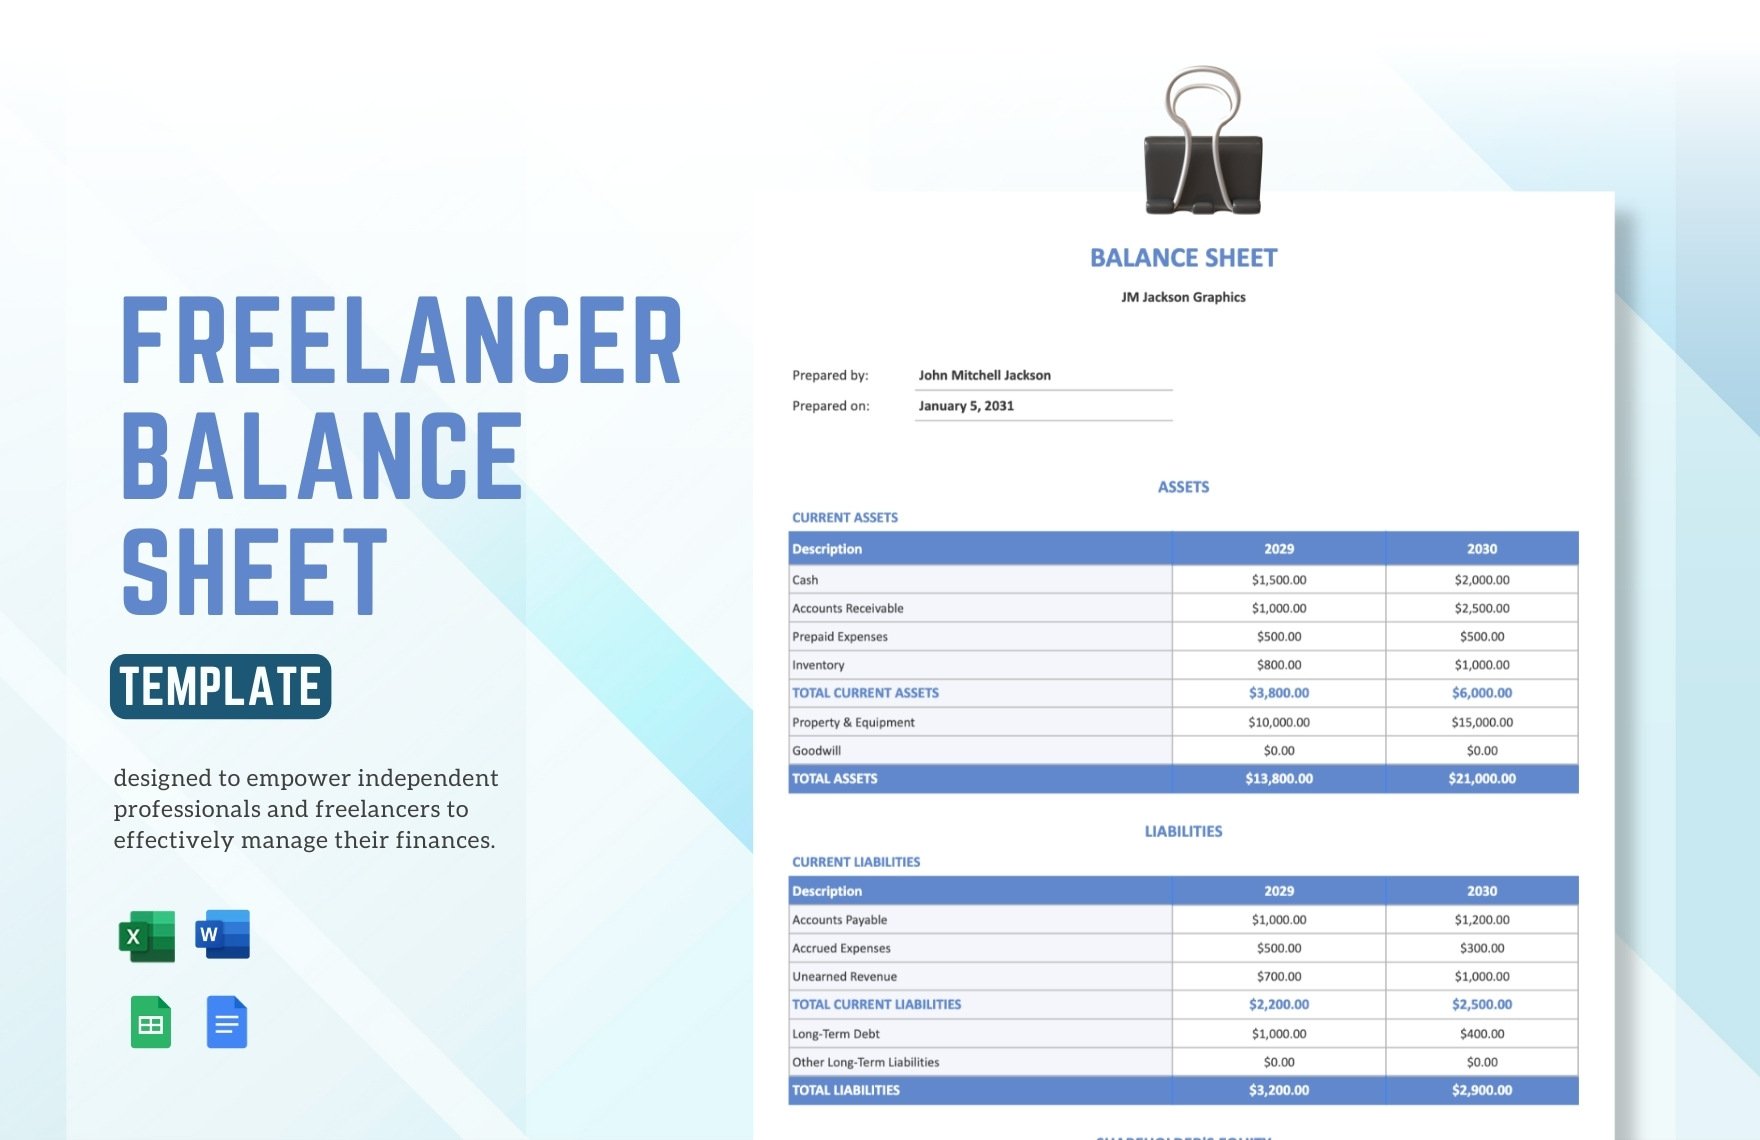 Freelancer Balance Sheet Template in Word, Google Docs, Excel, Google Sheets